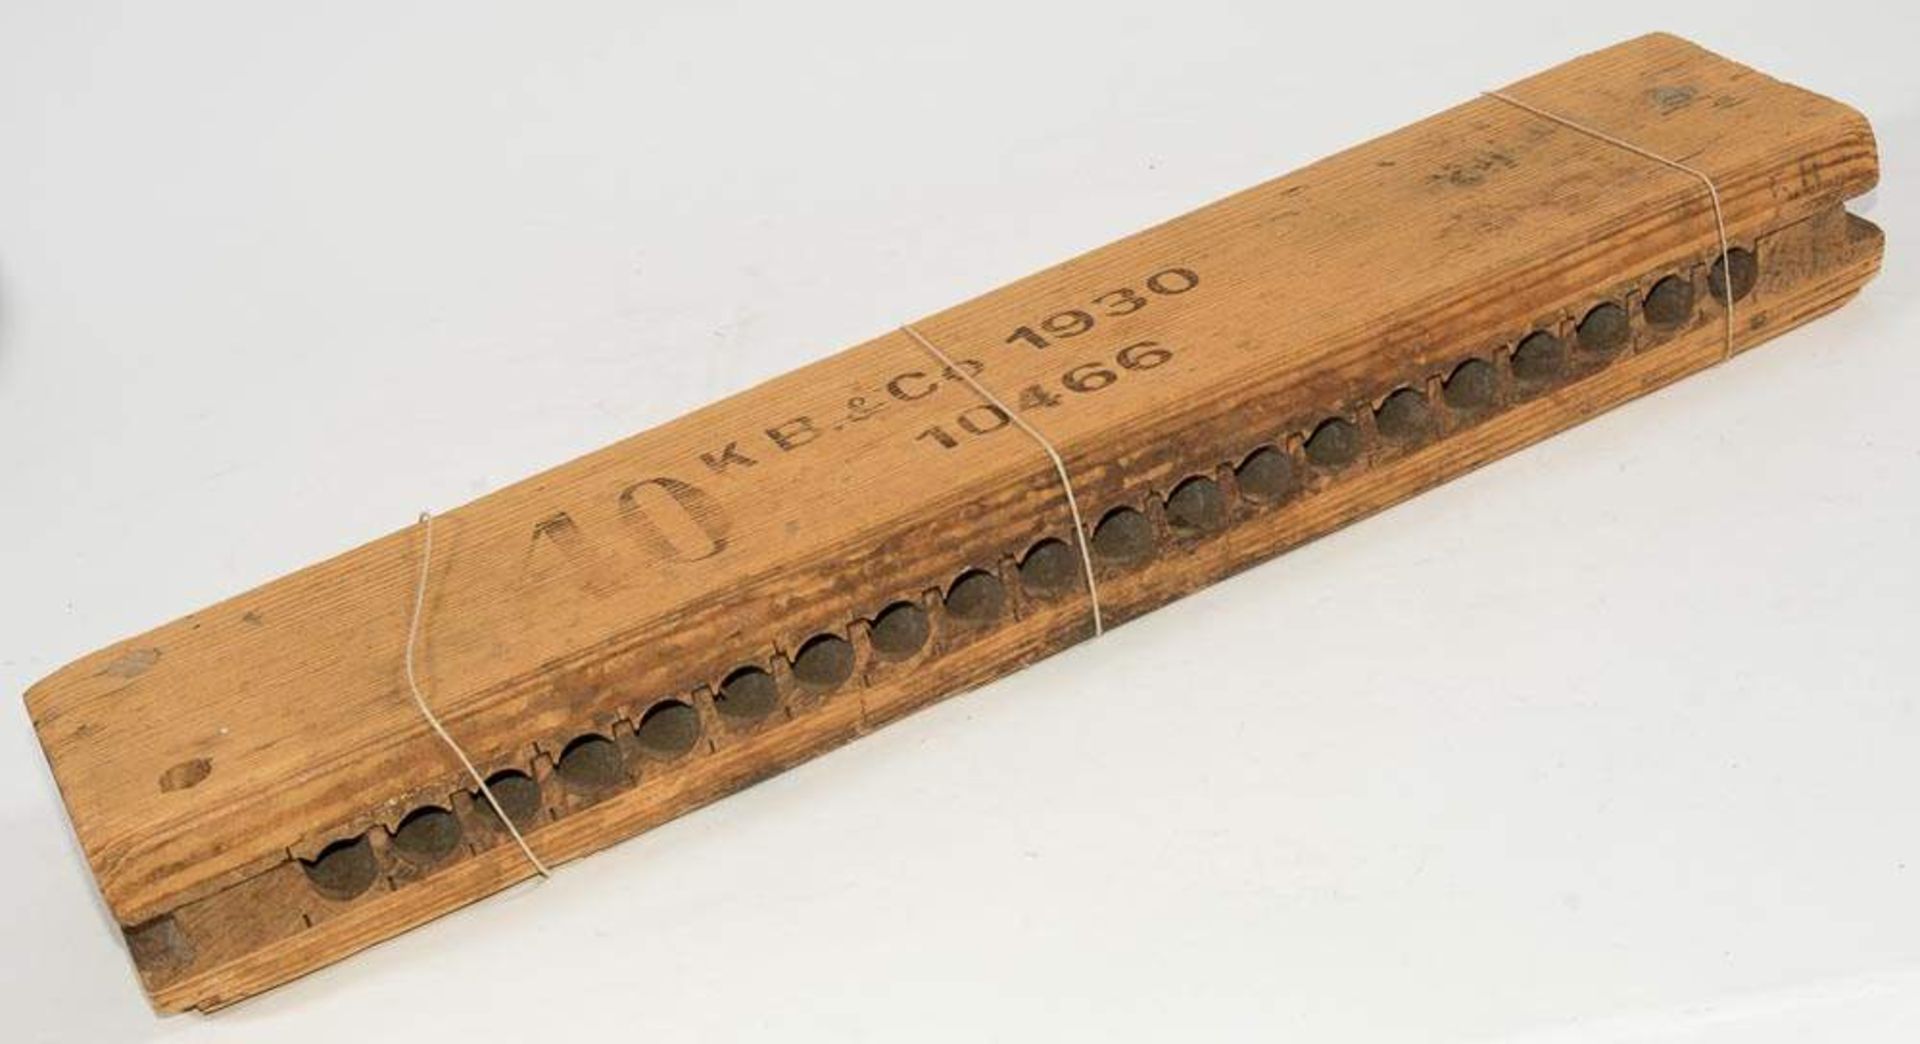 Zigarrenpresse. Holz. Bez. "K. B. & Co. 1930 -  No. 10466". Länge 57 cm. - Image 5 of 5